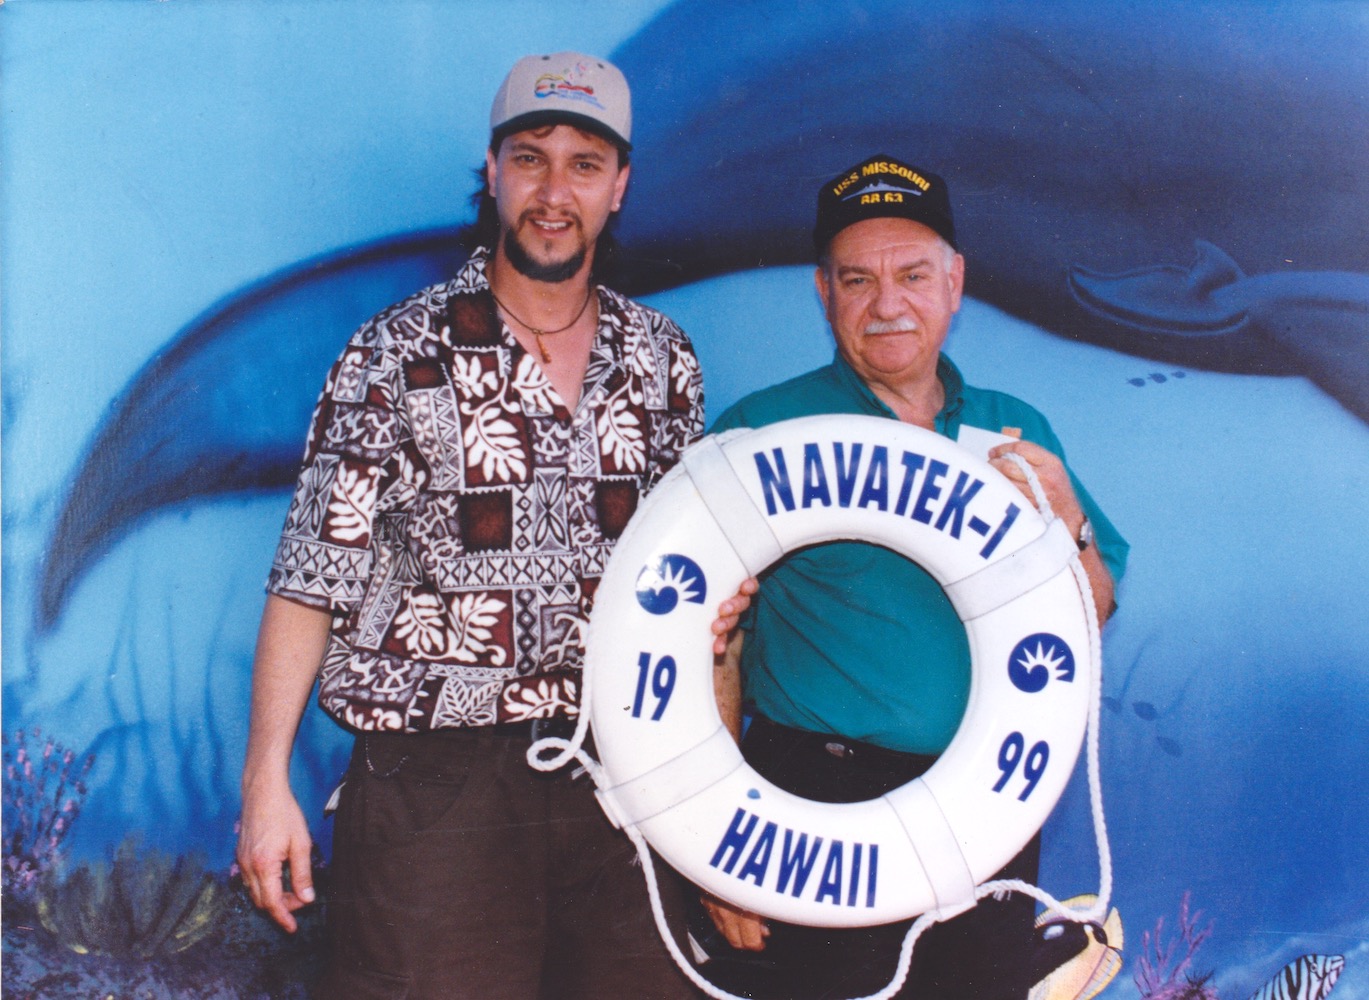 Richard Patrick Sequeira and K.C. Potter, 1999, Hawaii.